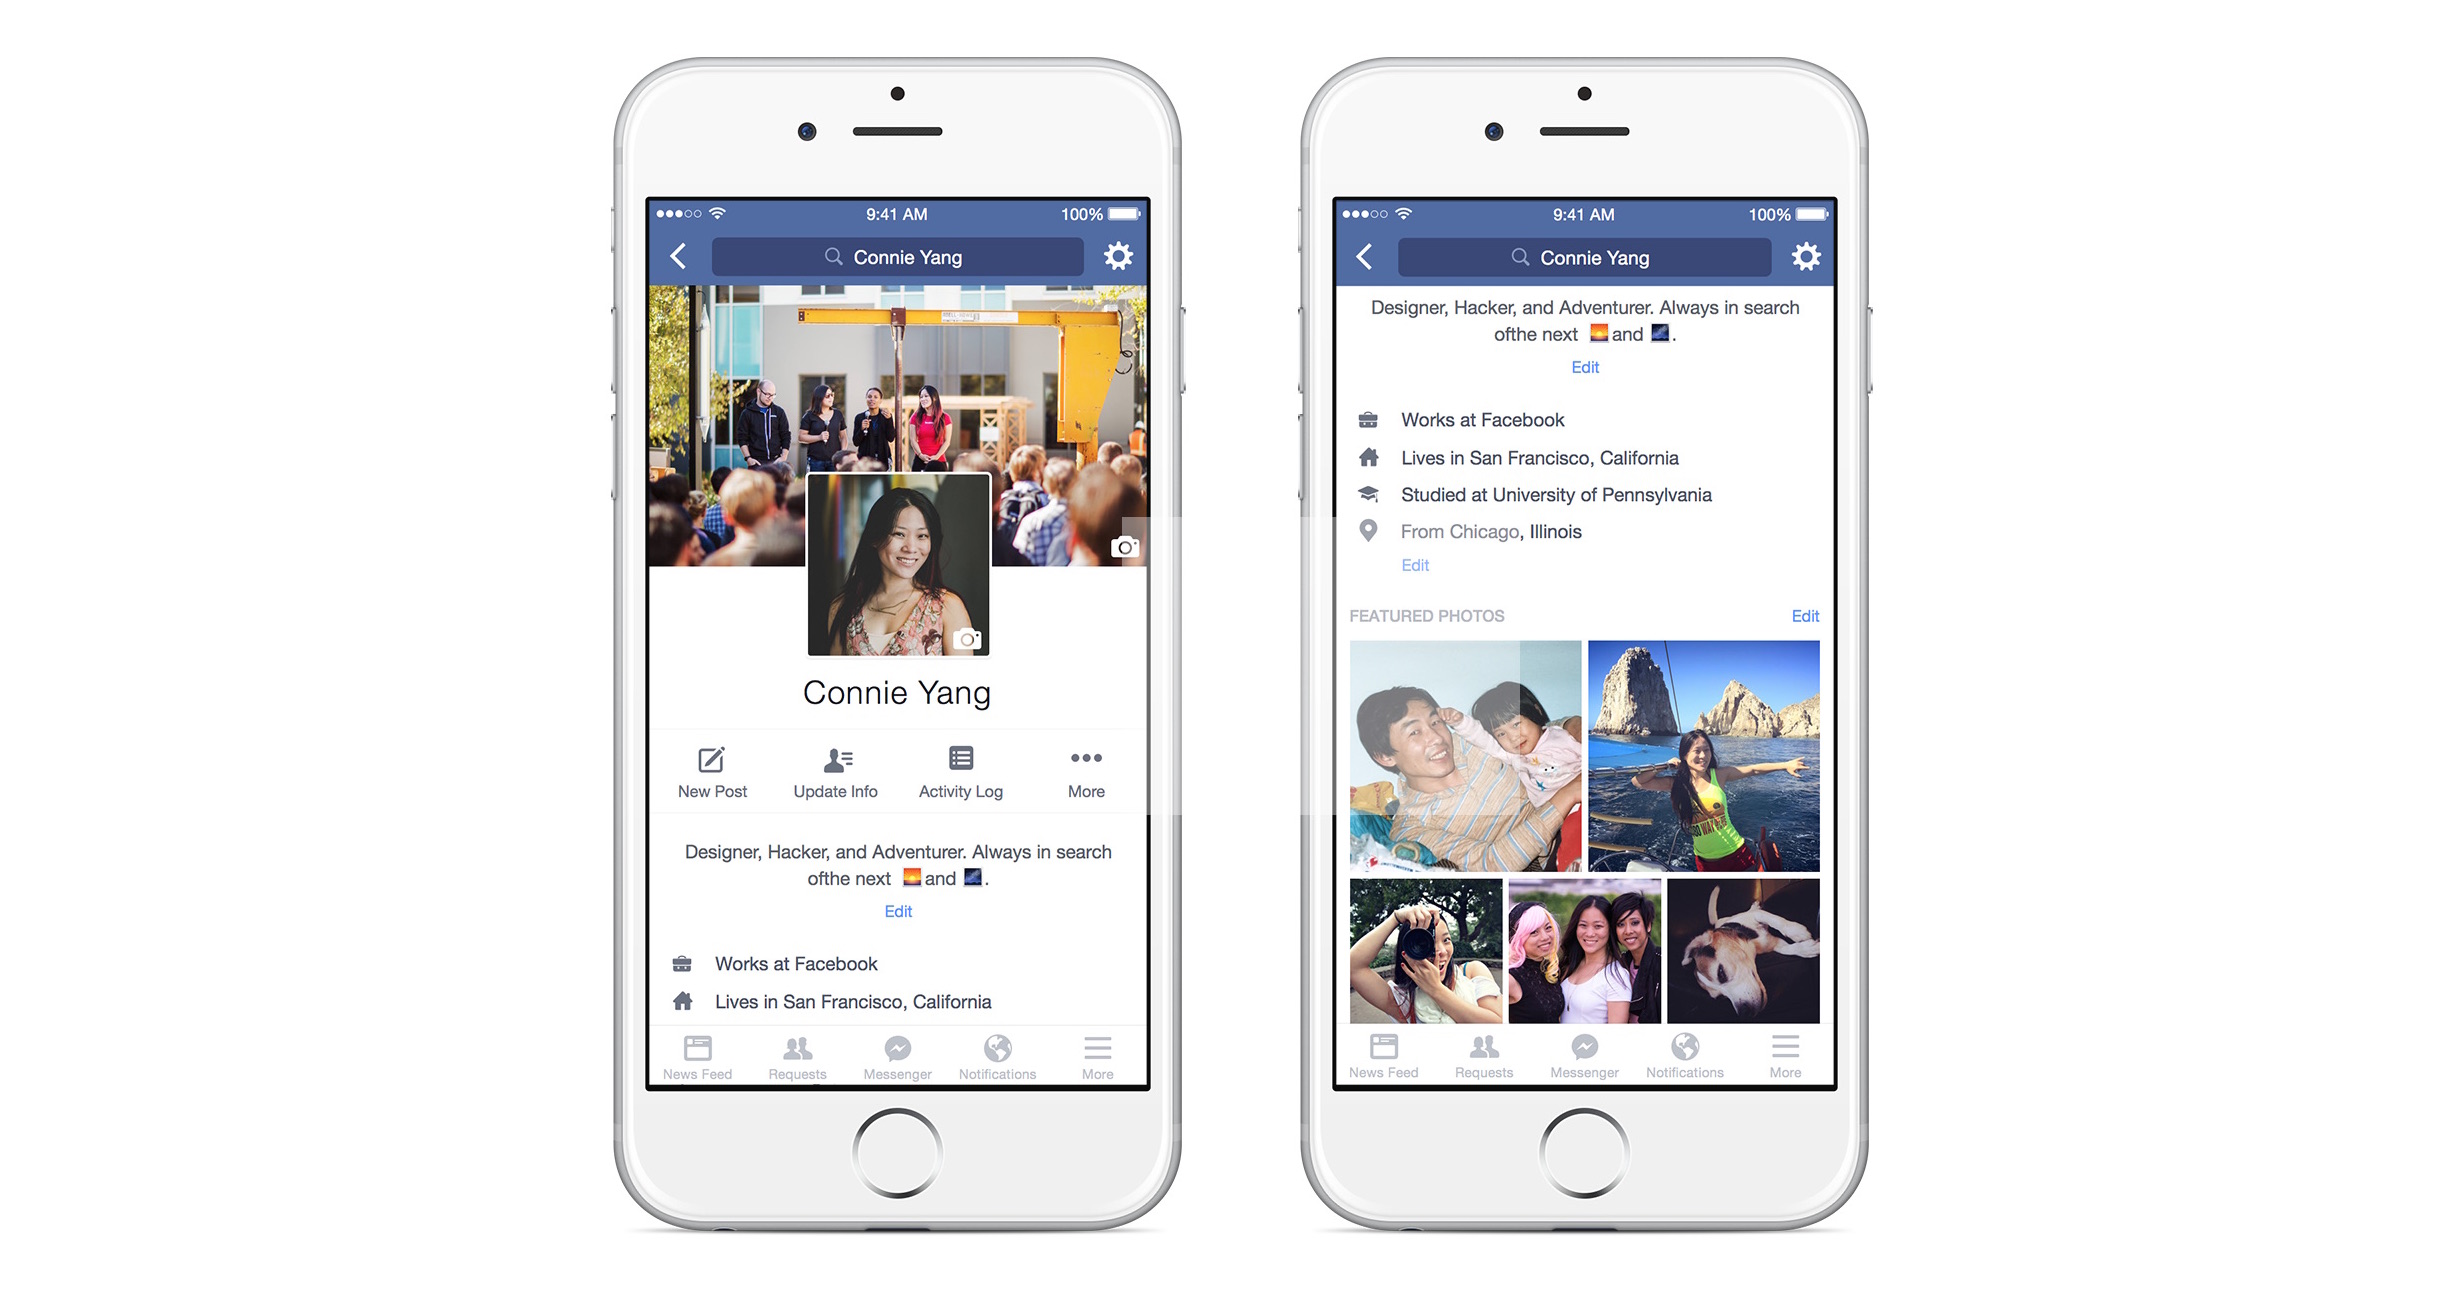 Nouveau Profil Mobile 1 - Facebook 2015